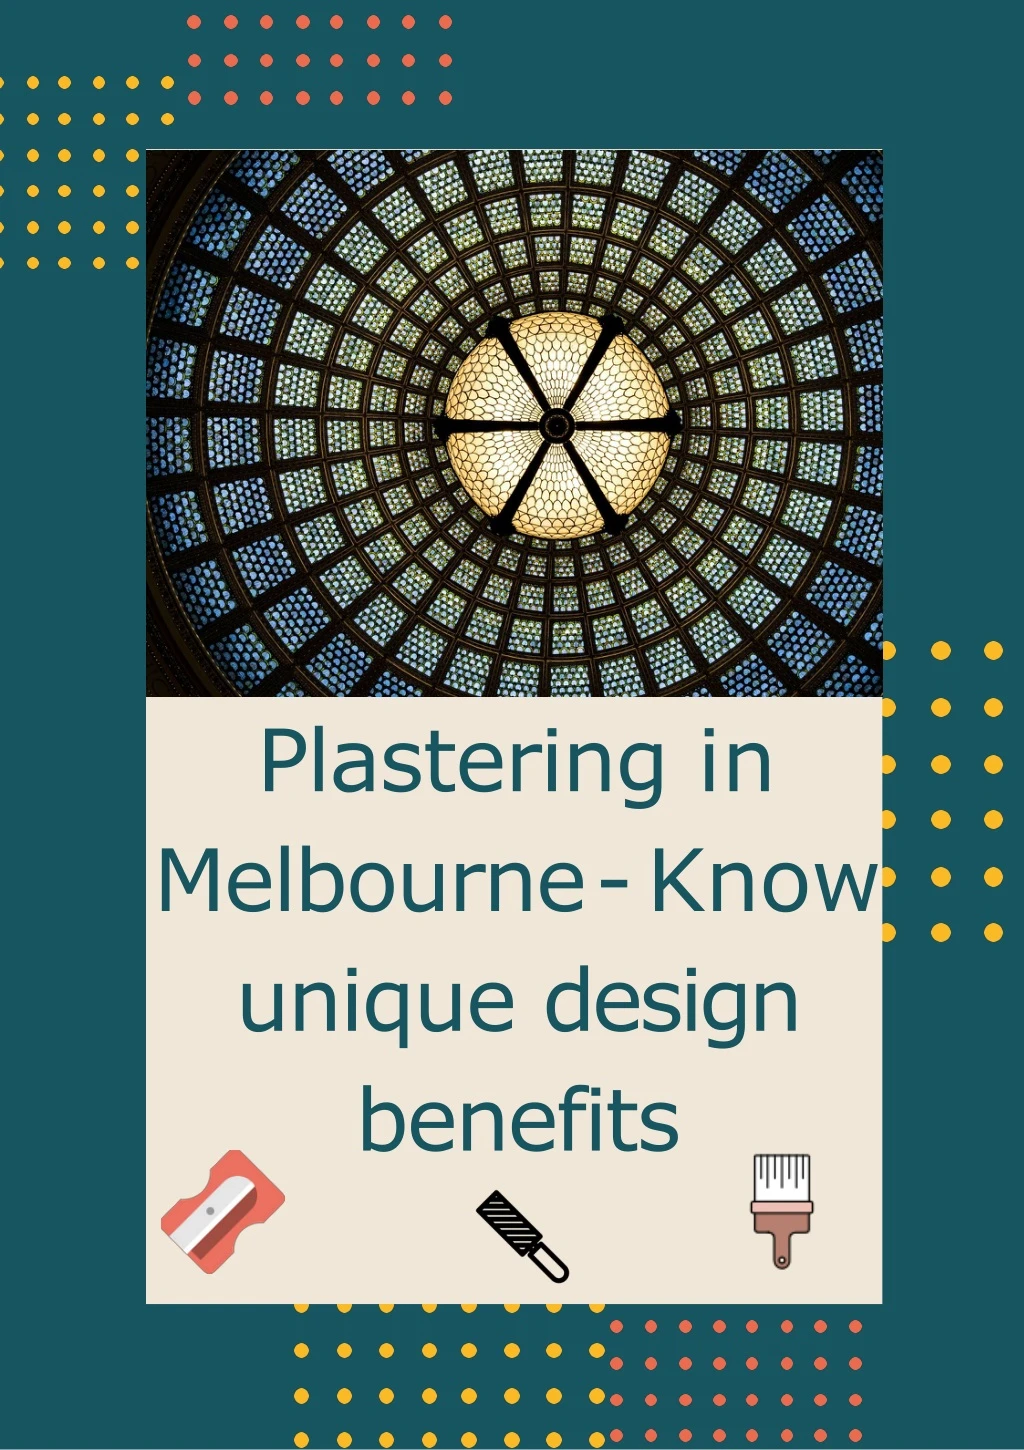 plastering in melbourne know unique design